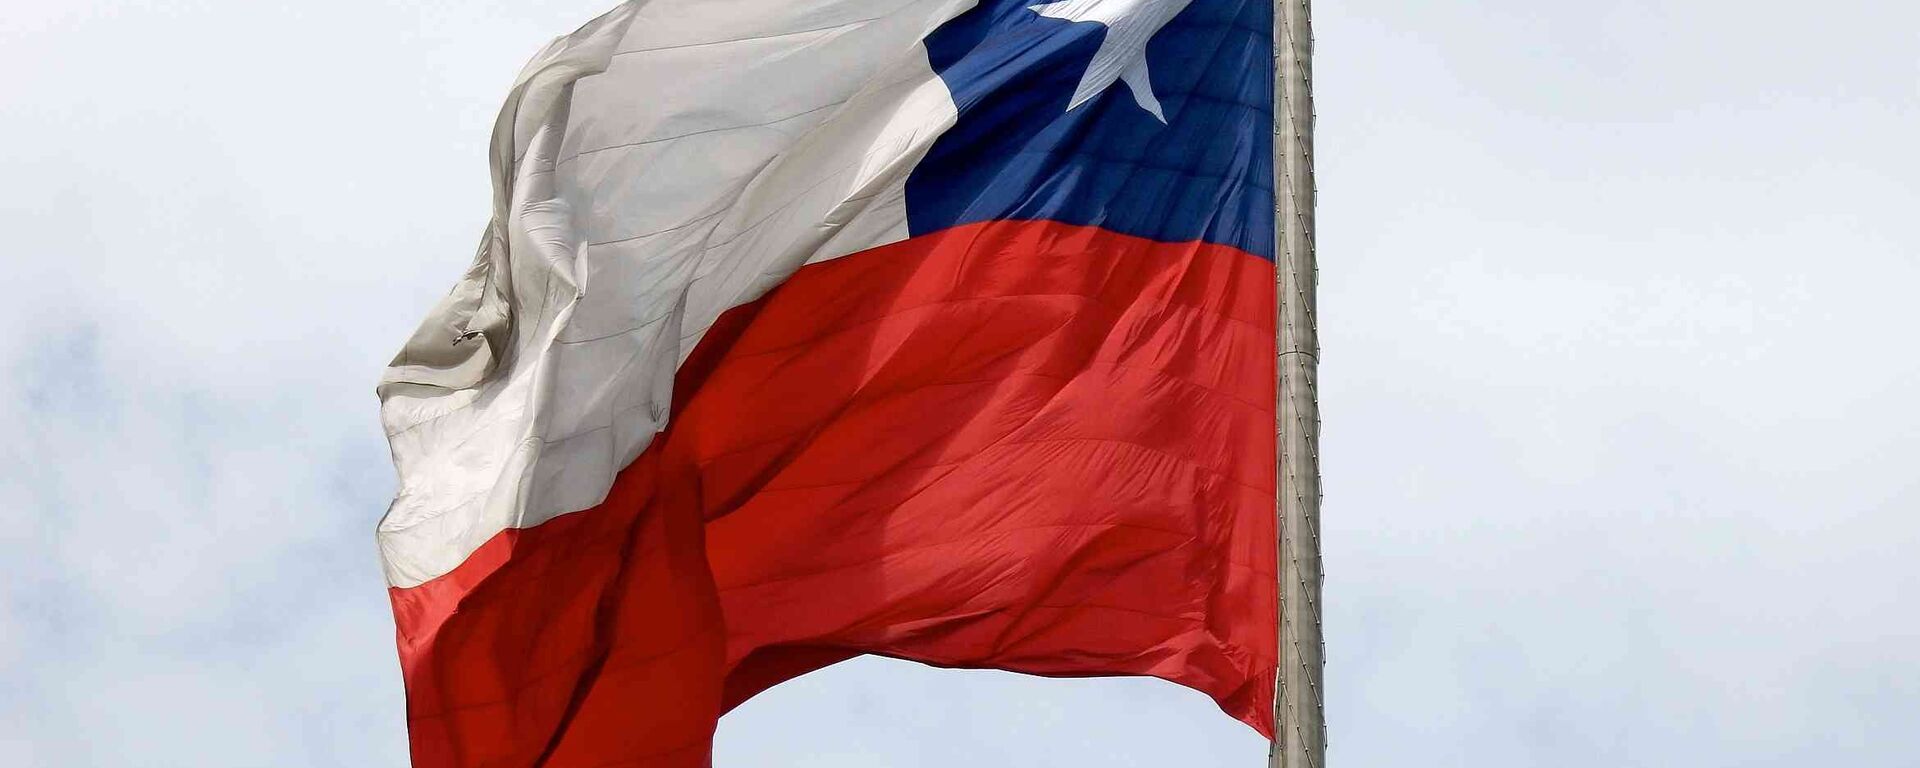 Bandera de Chile - Sputnik Mundo, 1920, 30.07.2021